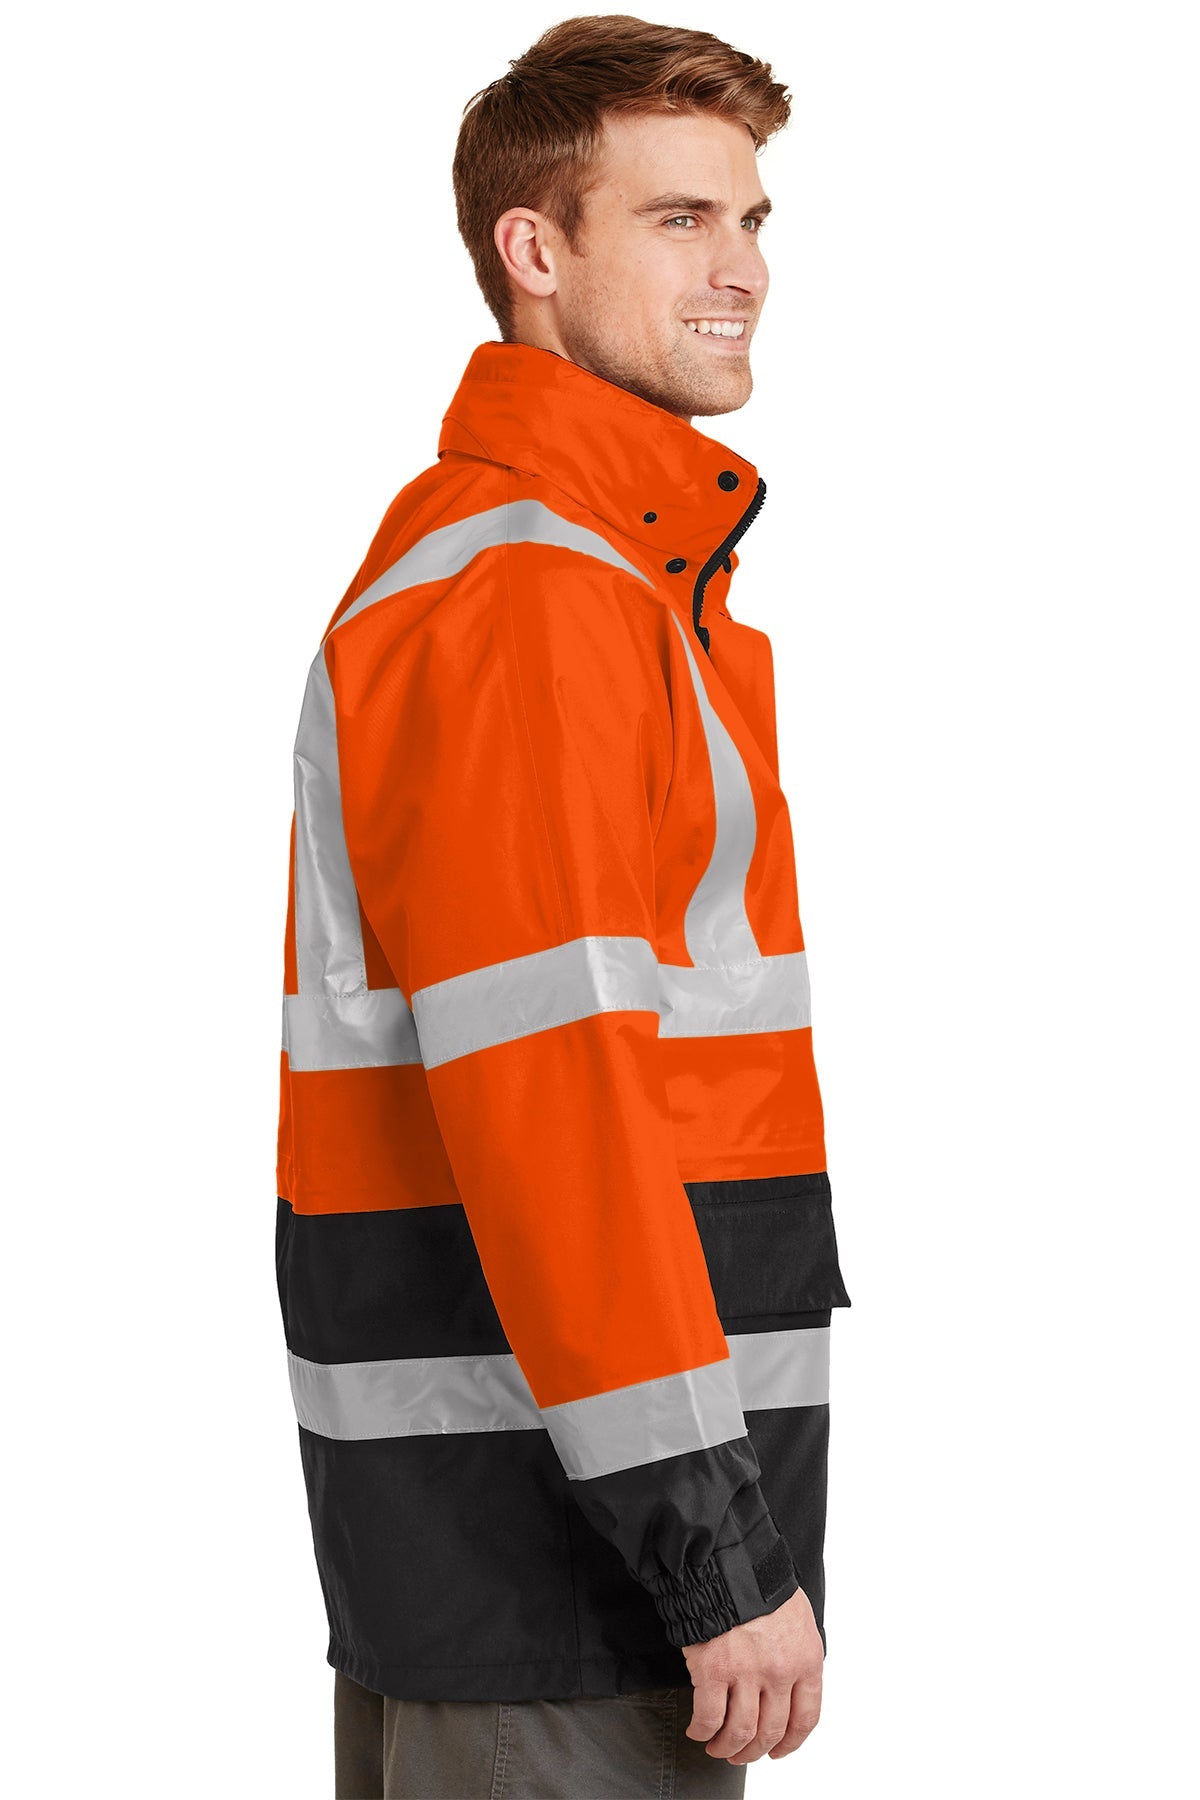 cornerstone_csj24 _safety orange/ black_company_logo_jackets